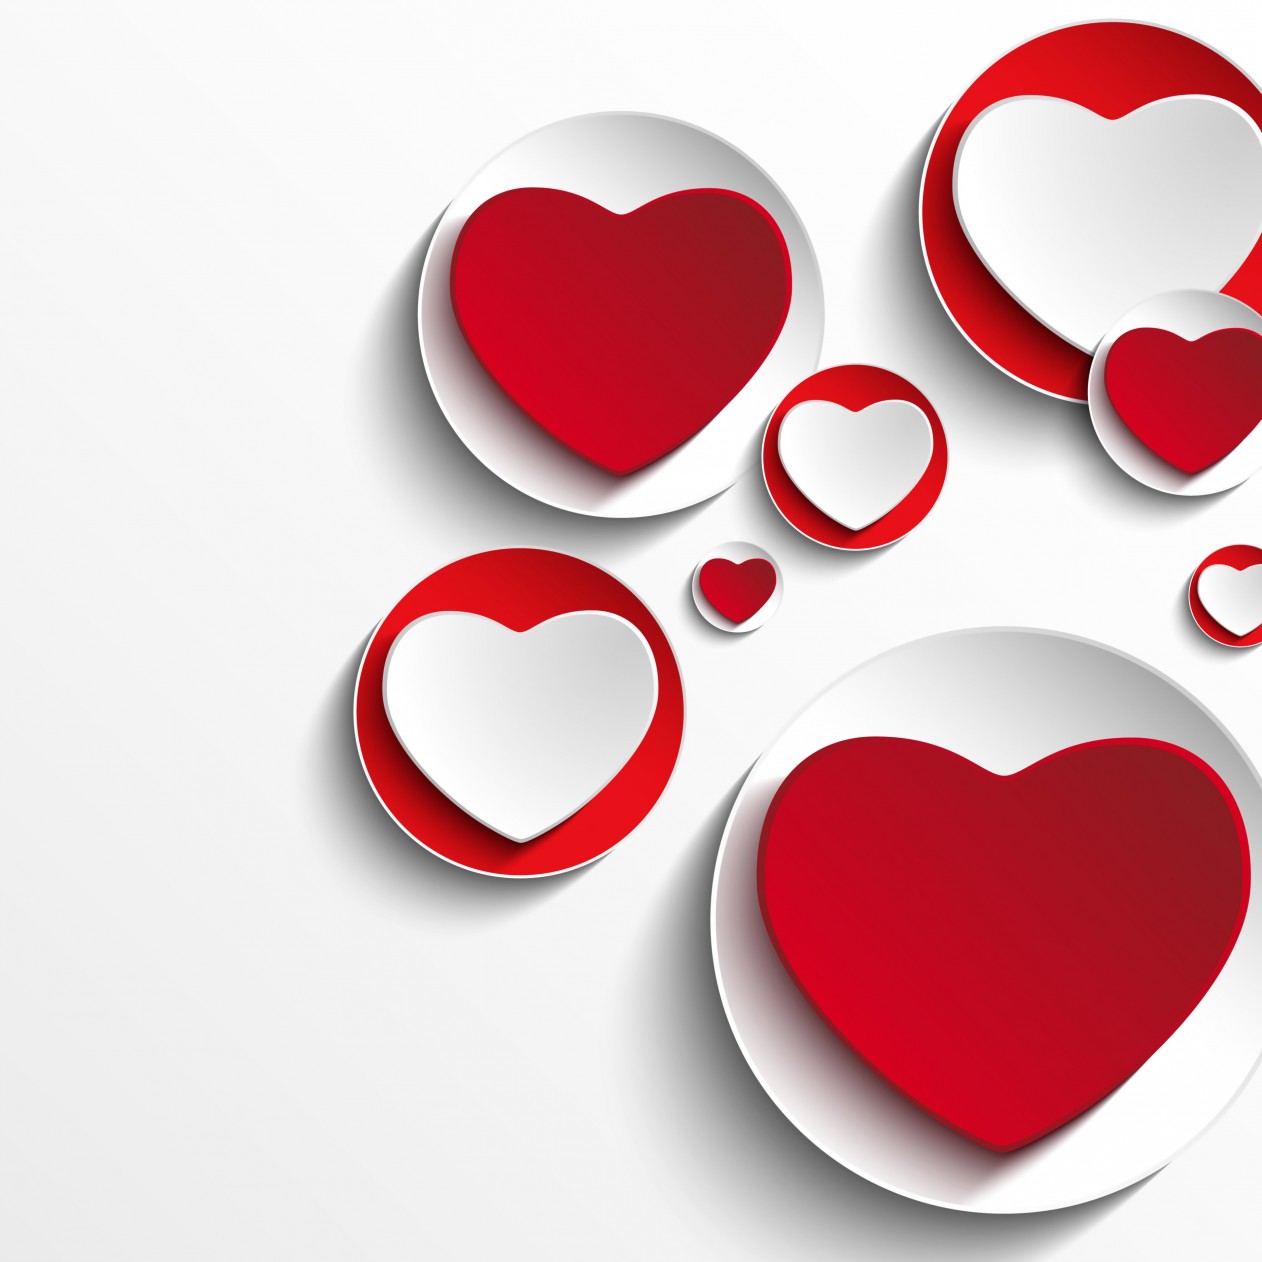 Minimalistic Hearts Shapes Wallpaper for Apple iPad mini